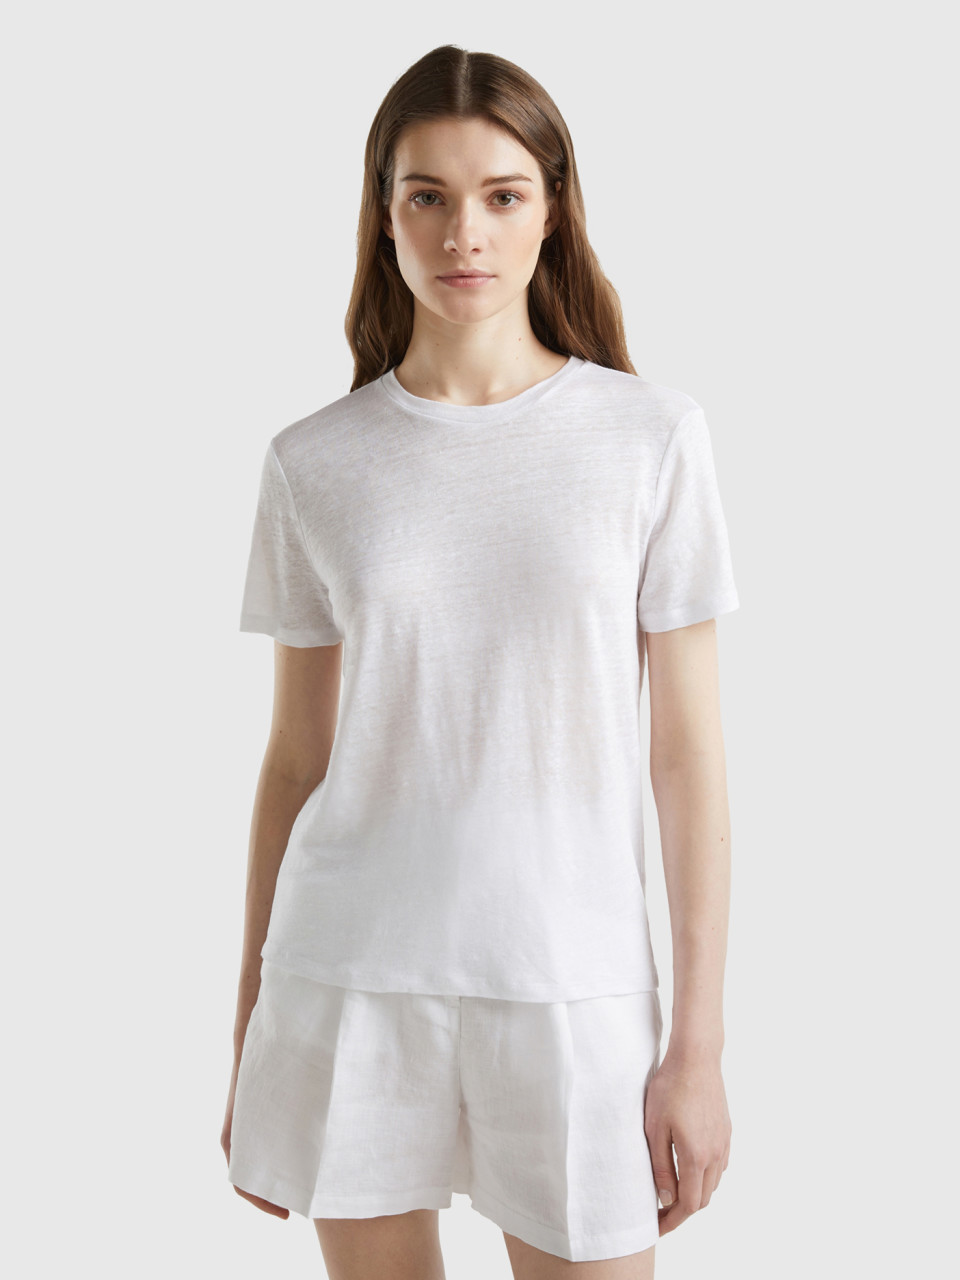 Benetton, Crew Neck T-shirt In Pure Linen, White, Women